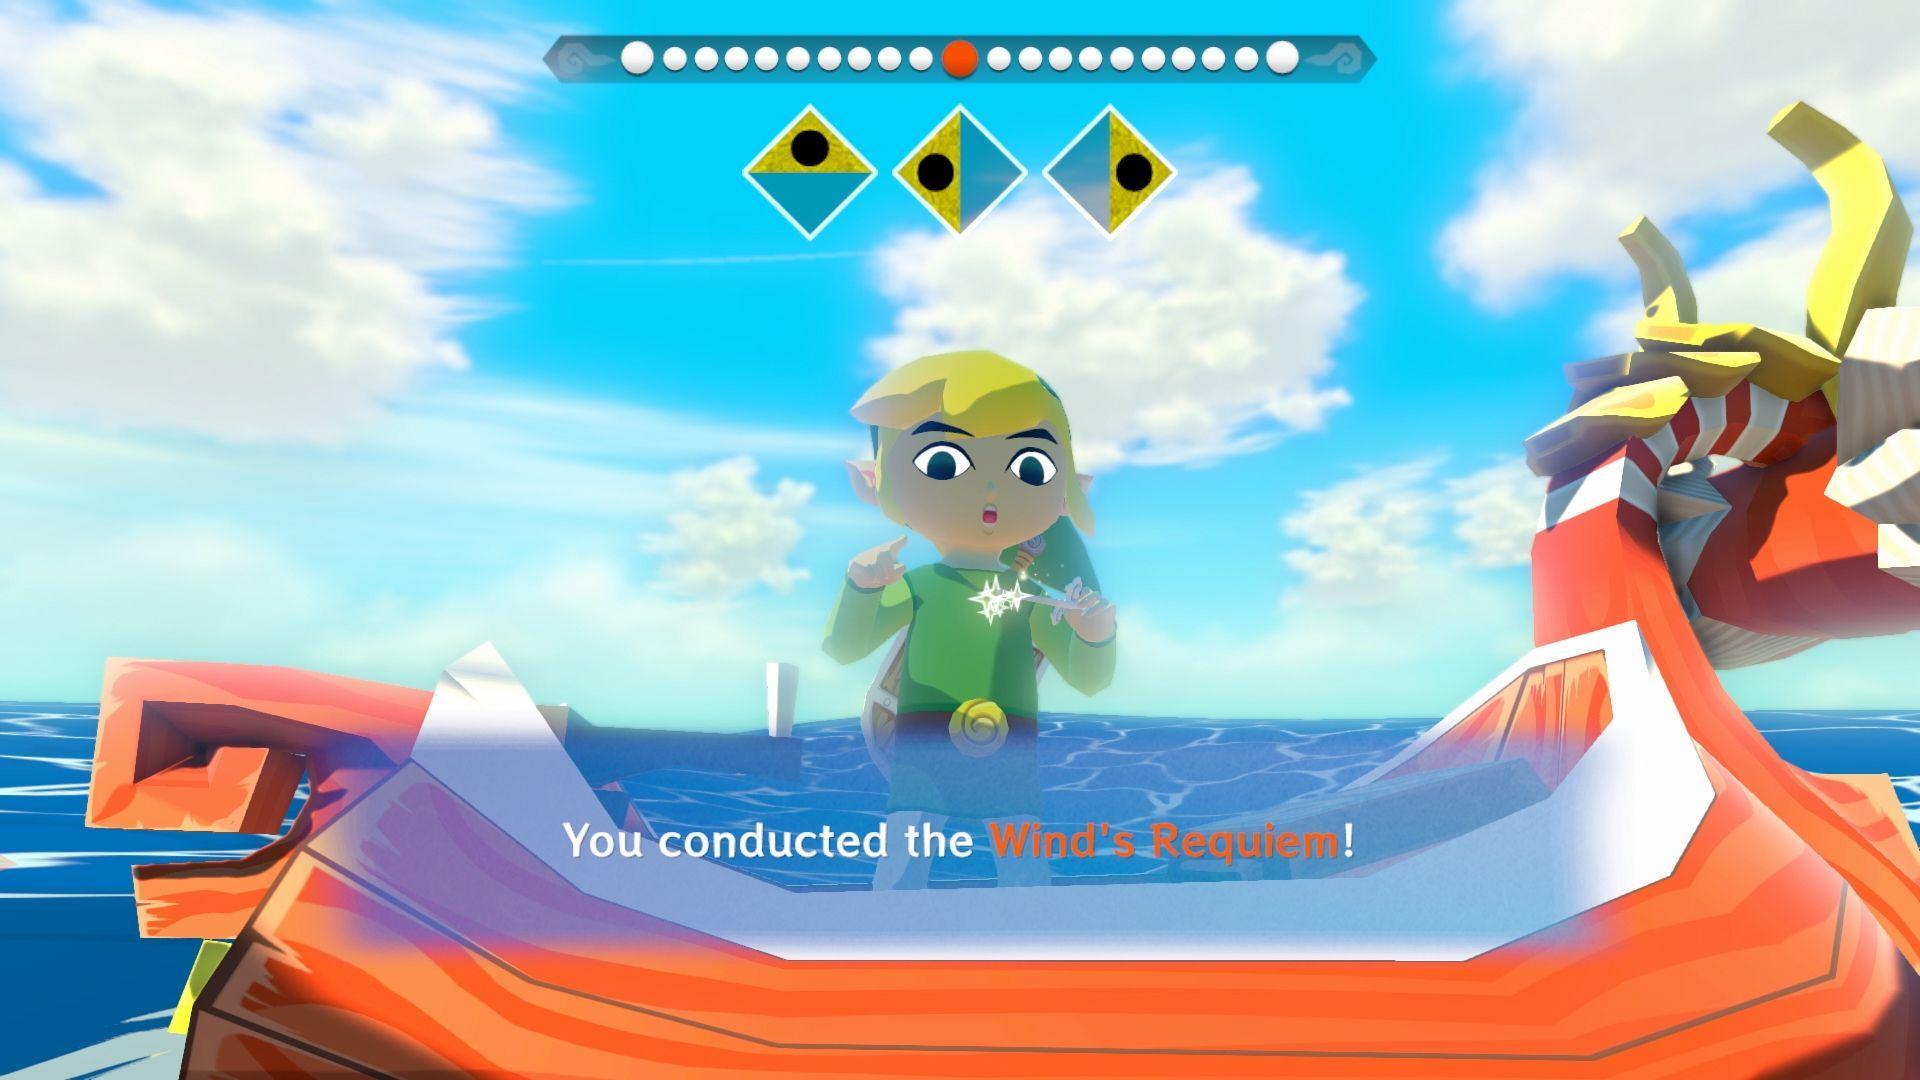 The Legend of Zelda: The Wind Waker HD screenshots show gameplay